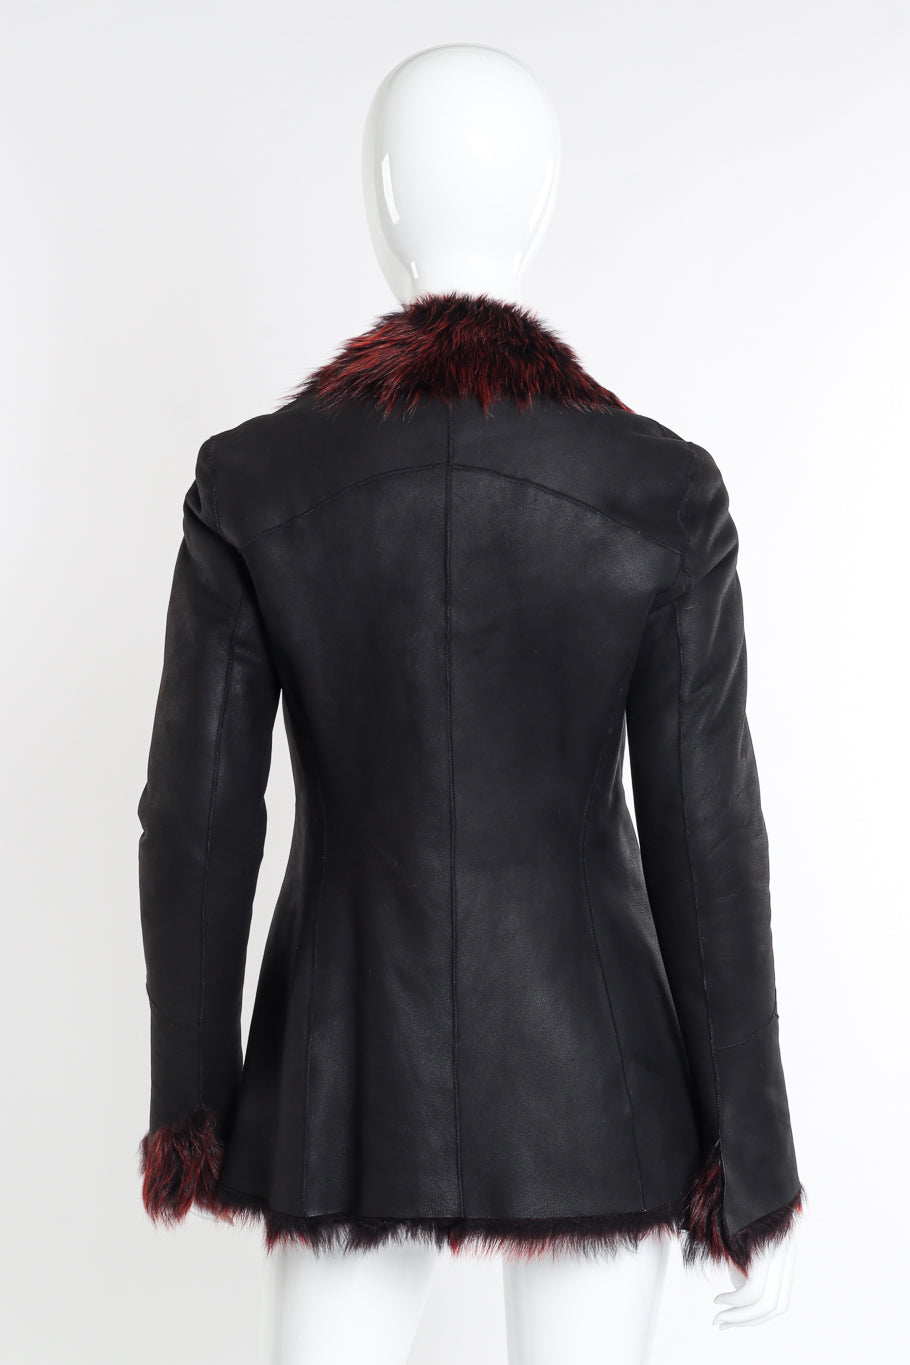 Vintage Les Habitudes Fur Trim Jacket back on mannequin @recessla